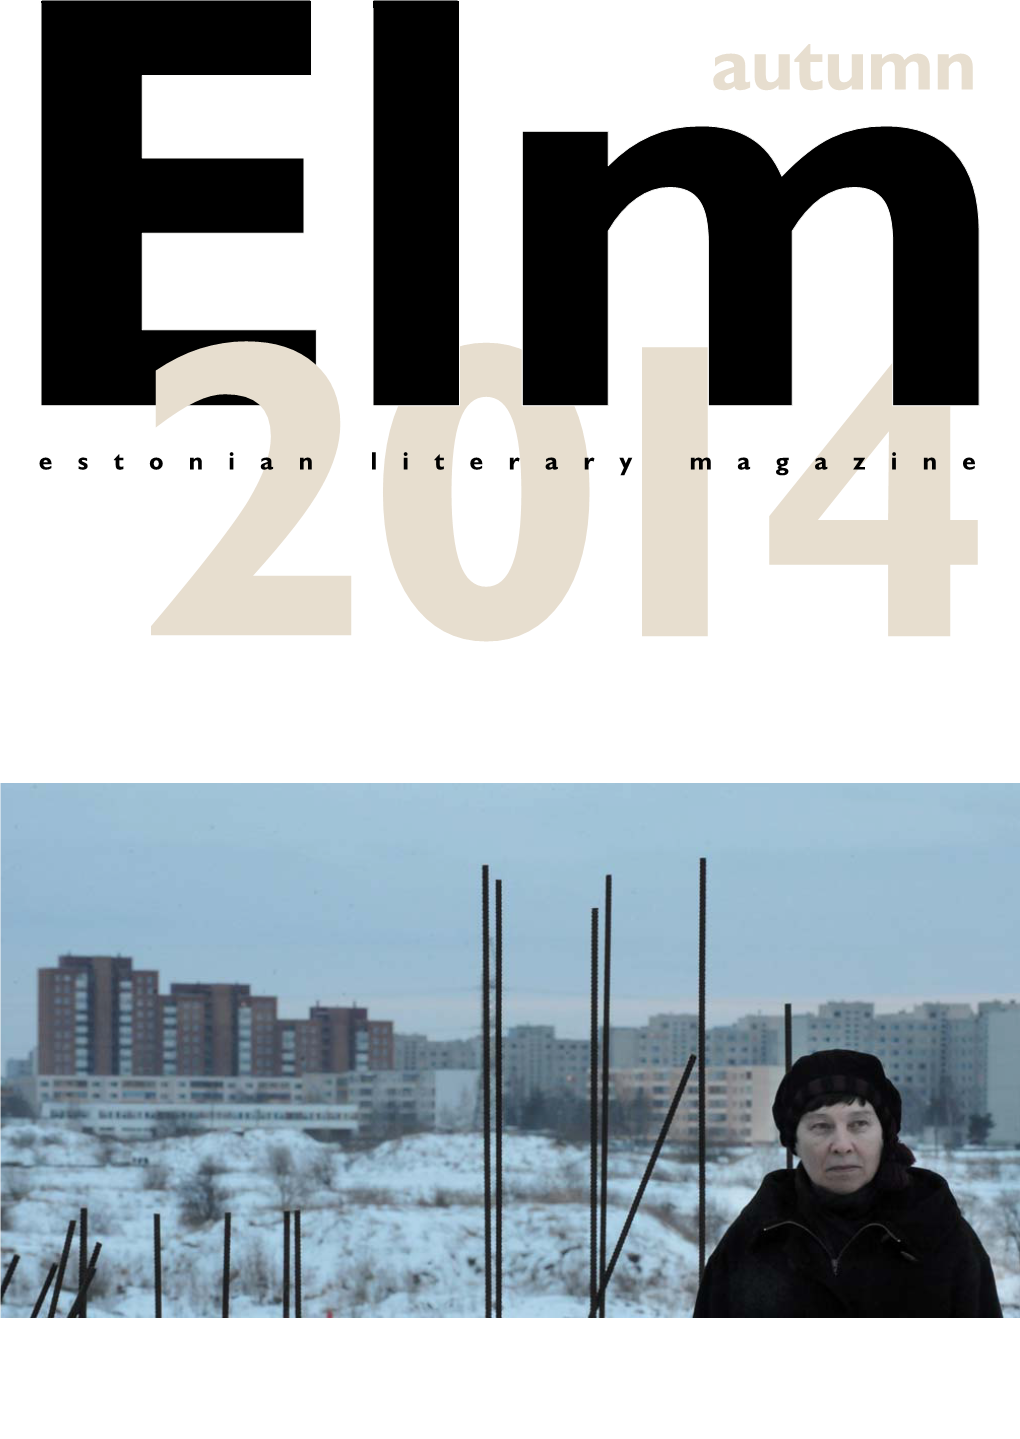 Elmautumn Estonian2 Literary014 Magazine Elm